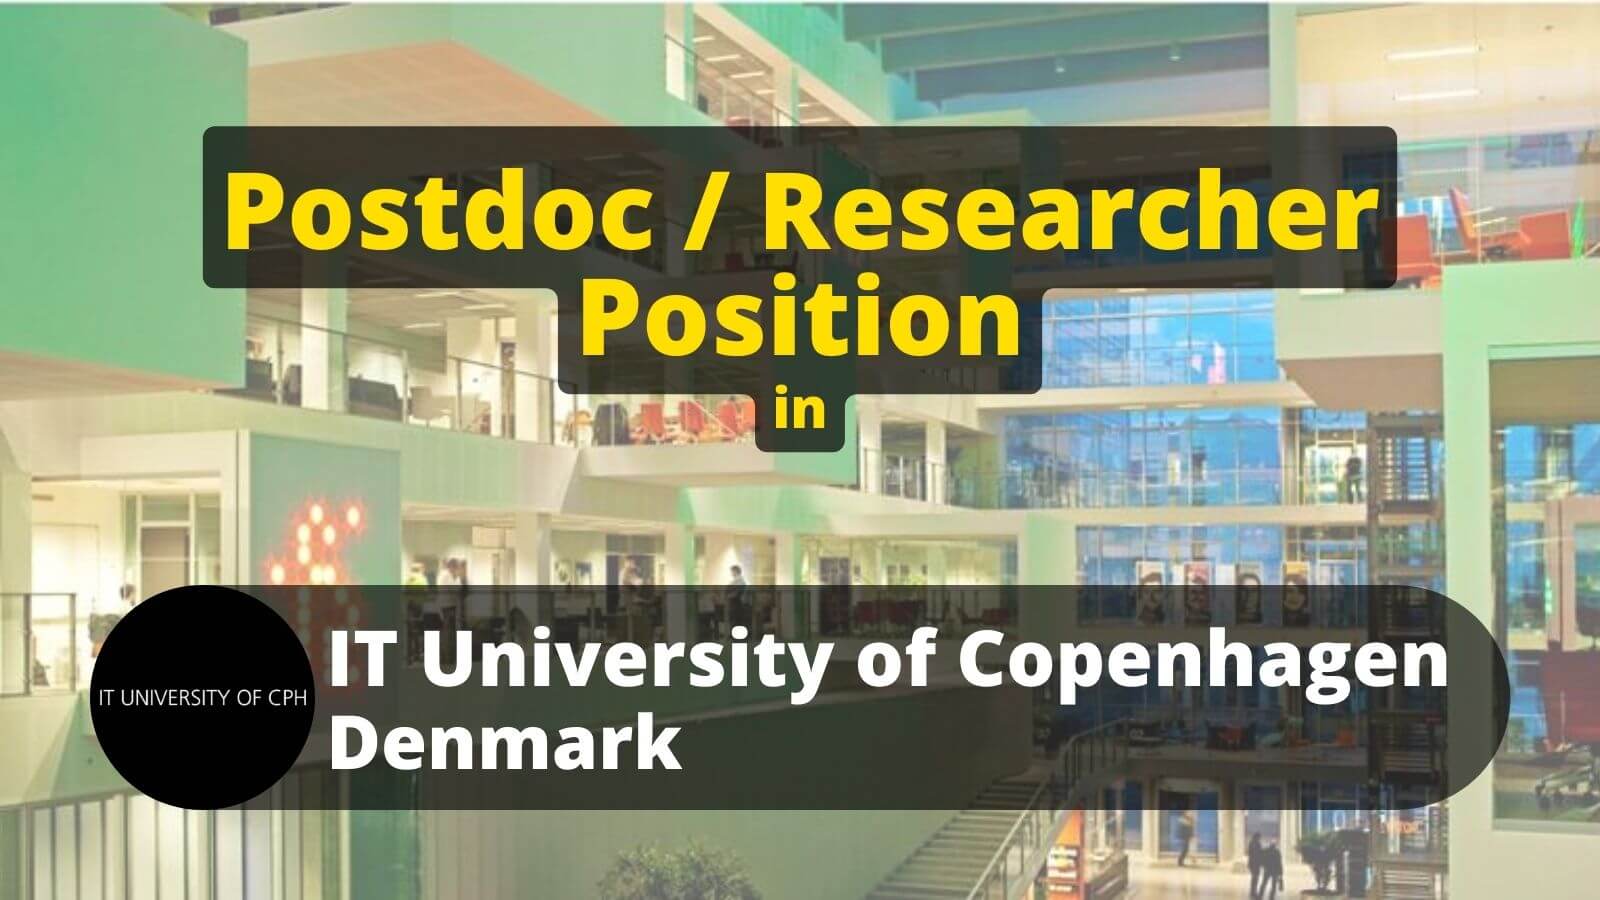 Postdoc jobs or Researcher Position IT University of Copenhagen ITU Denmark